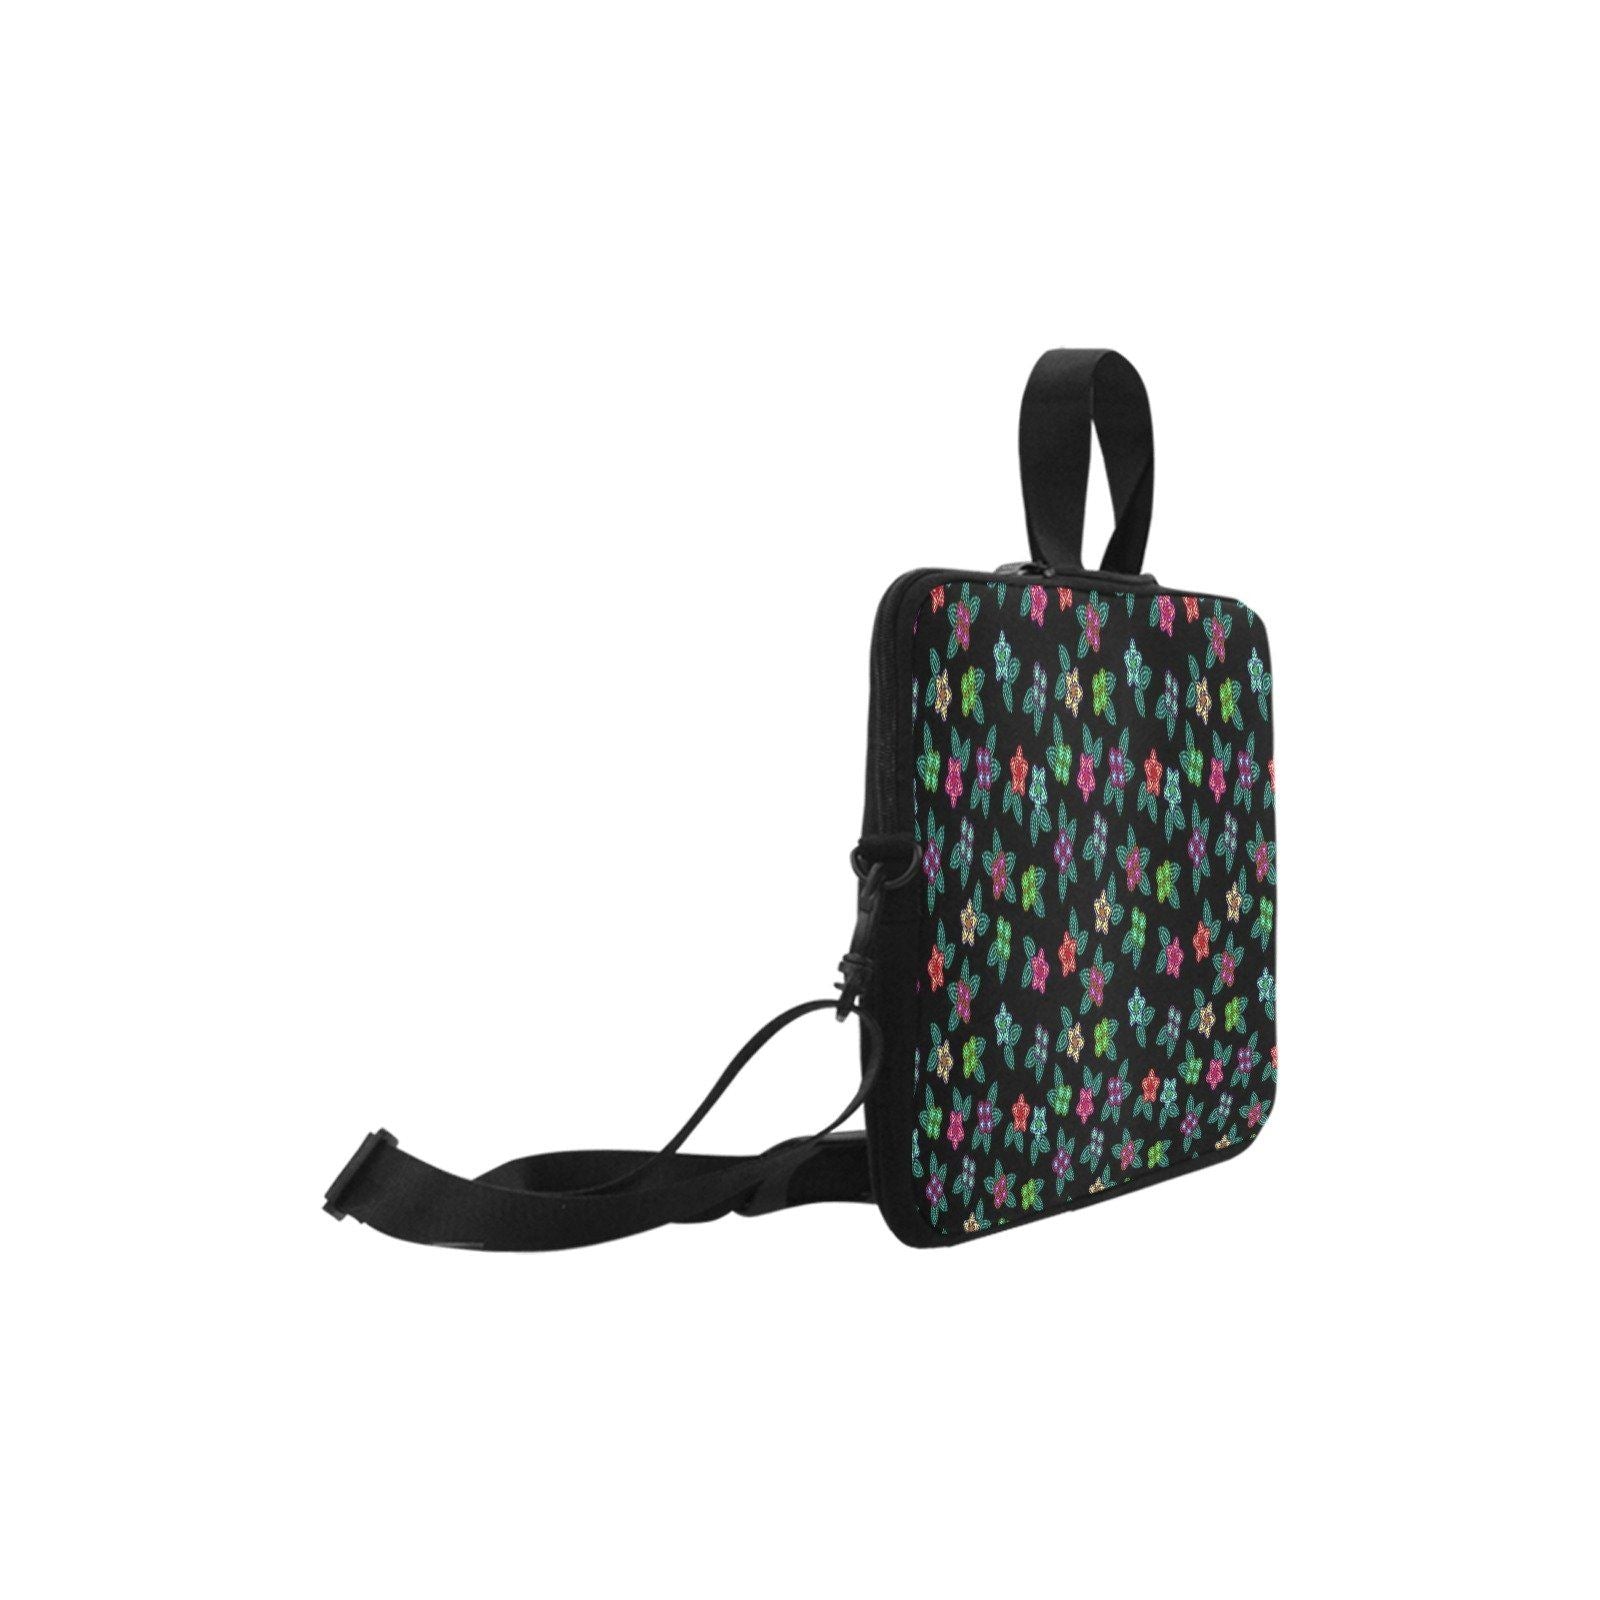 Berry Flowers Black Laptop Handbags 15" Laptop Handbags 15" e-joyer 